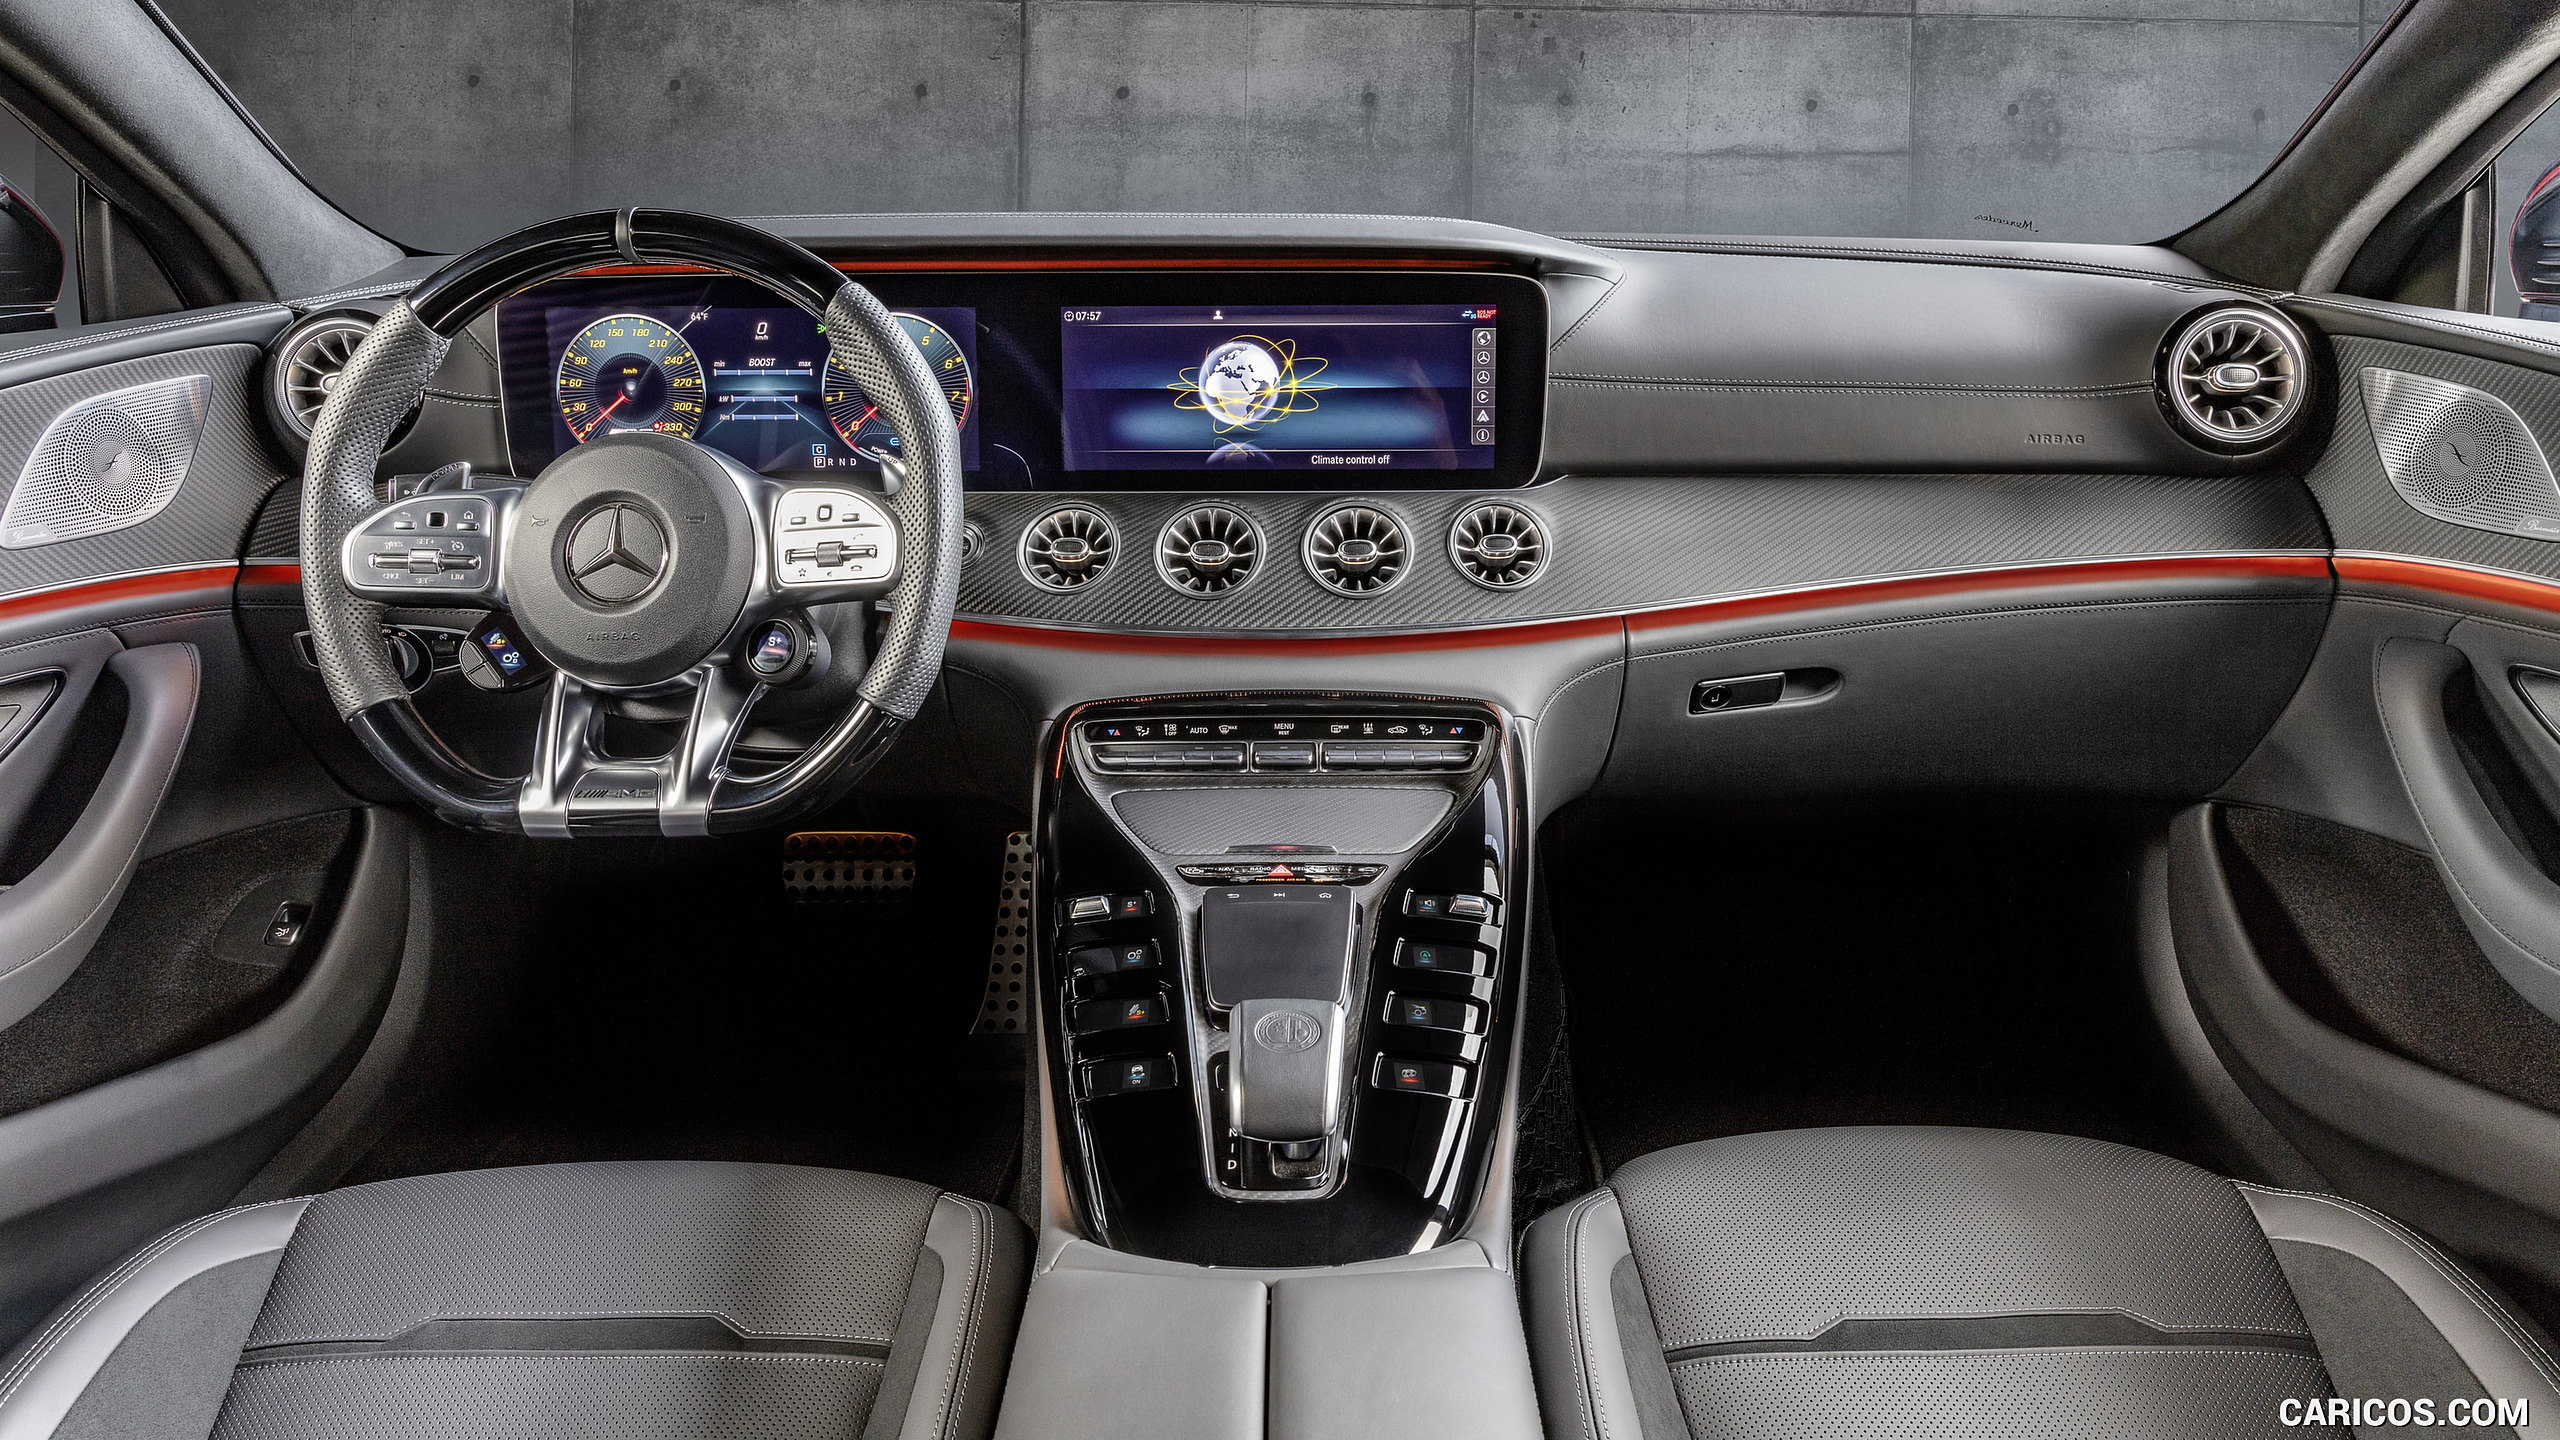 2019 Mercedes-AMG GT 43 4MATIC+ 4-Door Coupé - Interior, Cockpit, #14 of 16